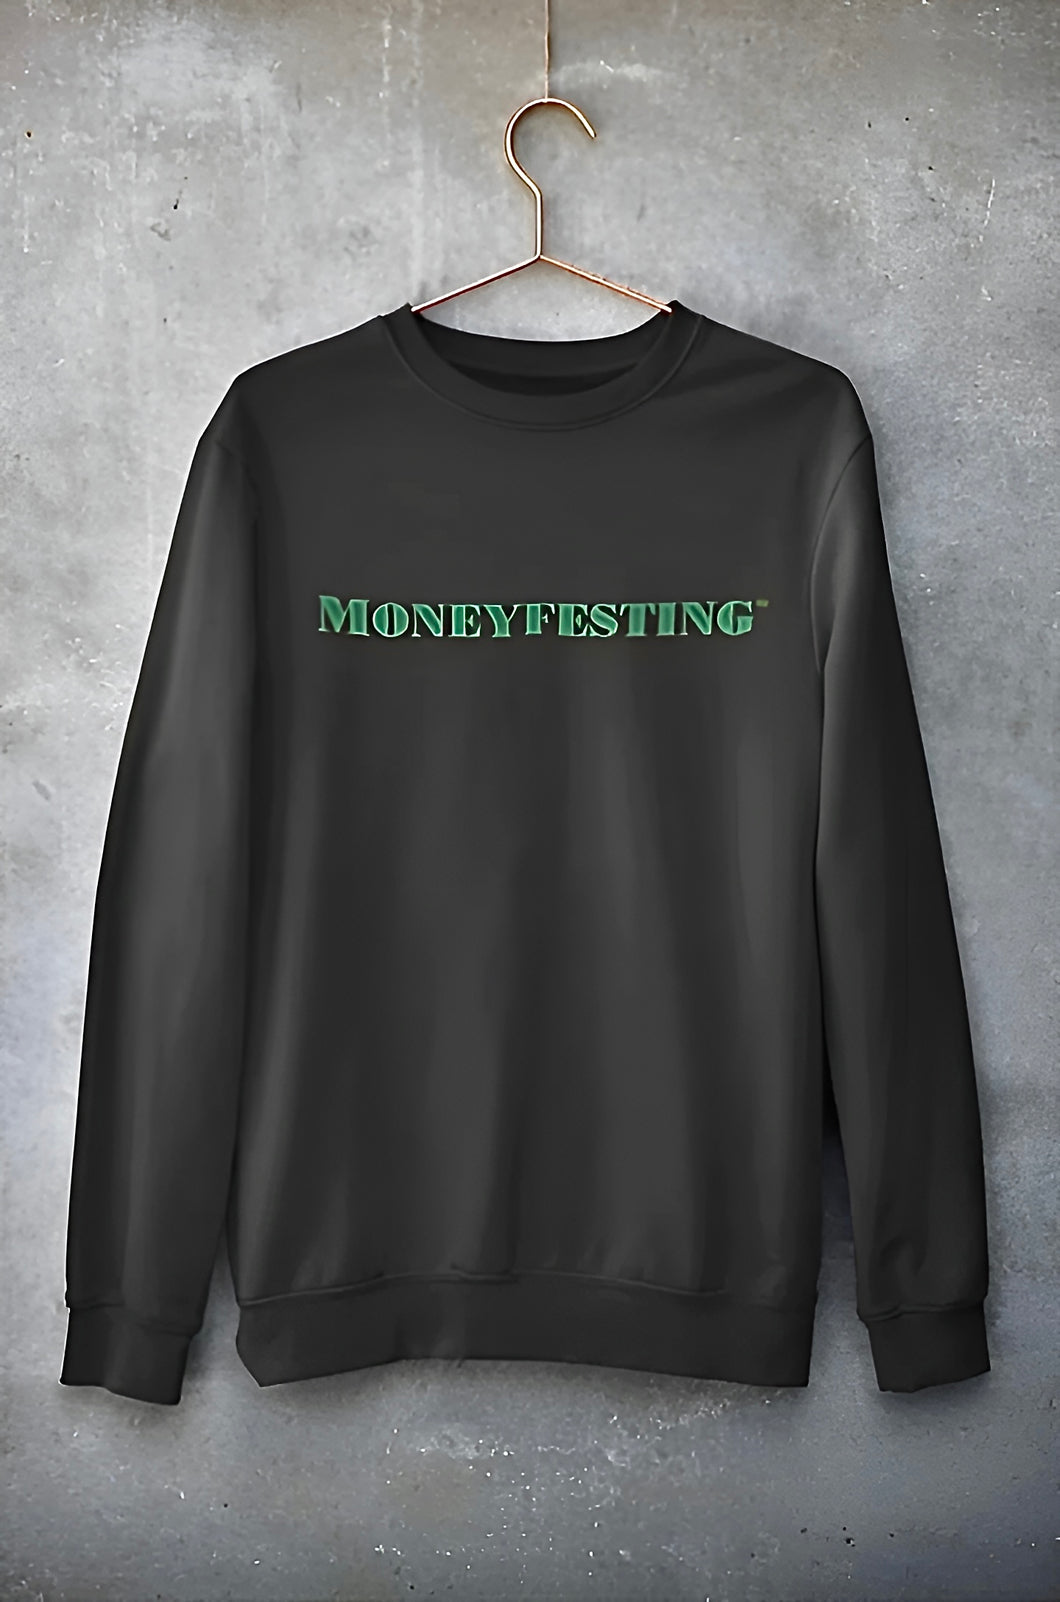 Moneyfesting™ sweatshirt